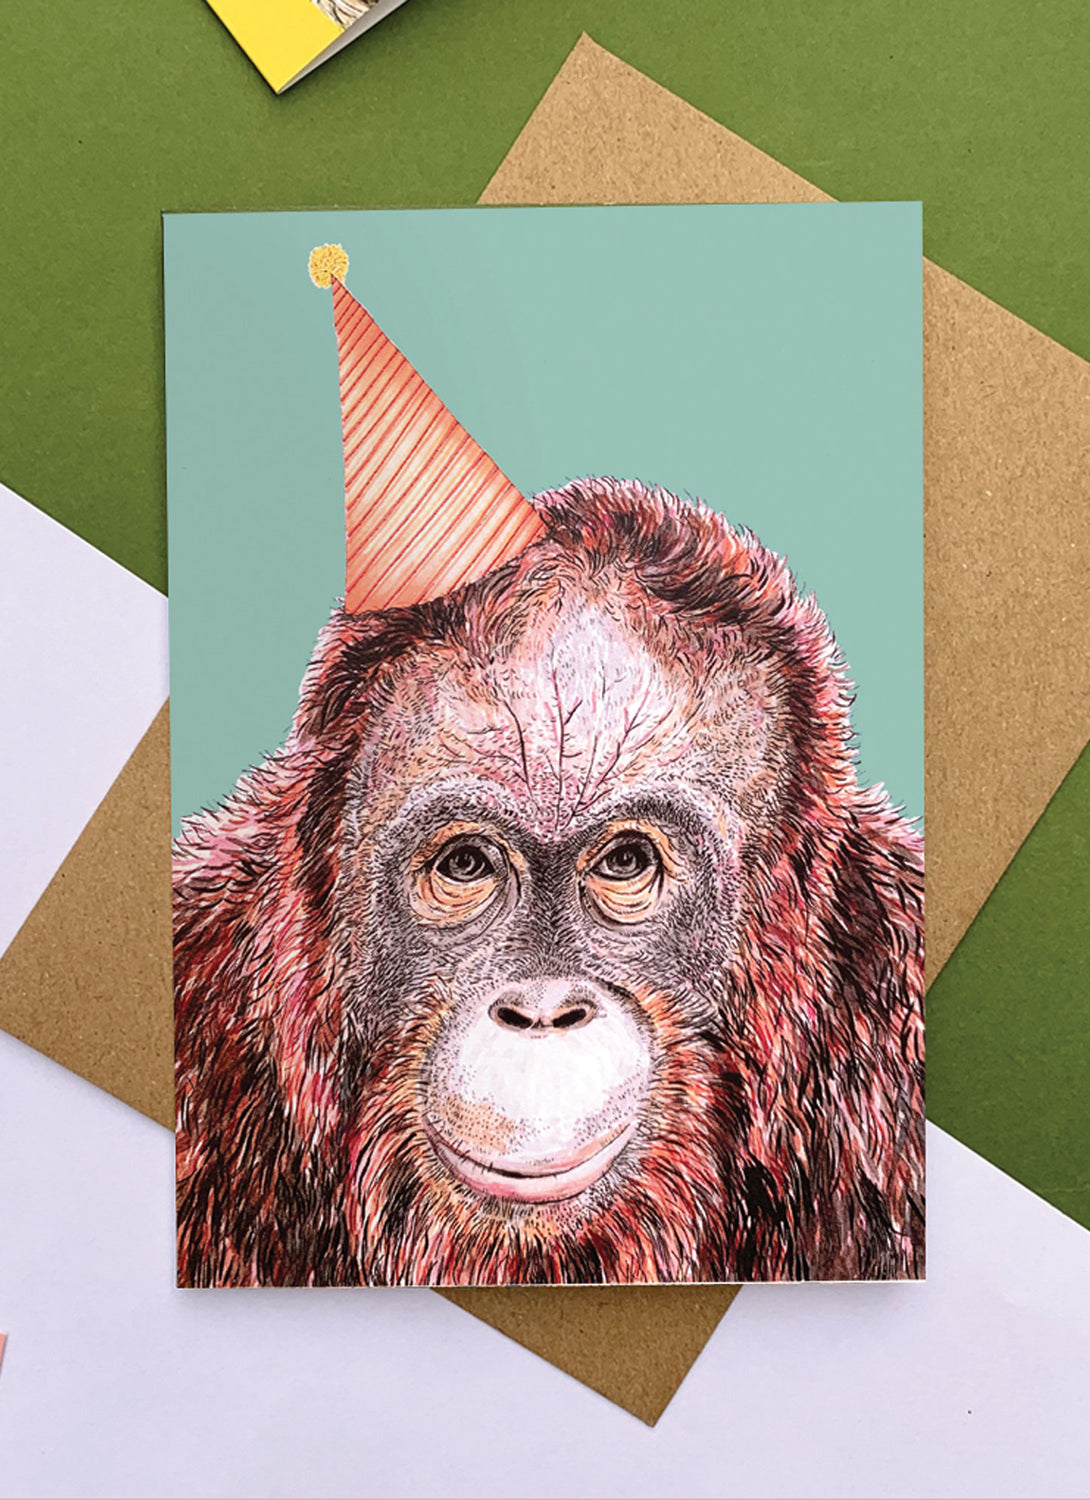 Orangutan Party Hat Turquoise